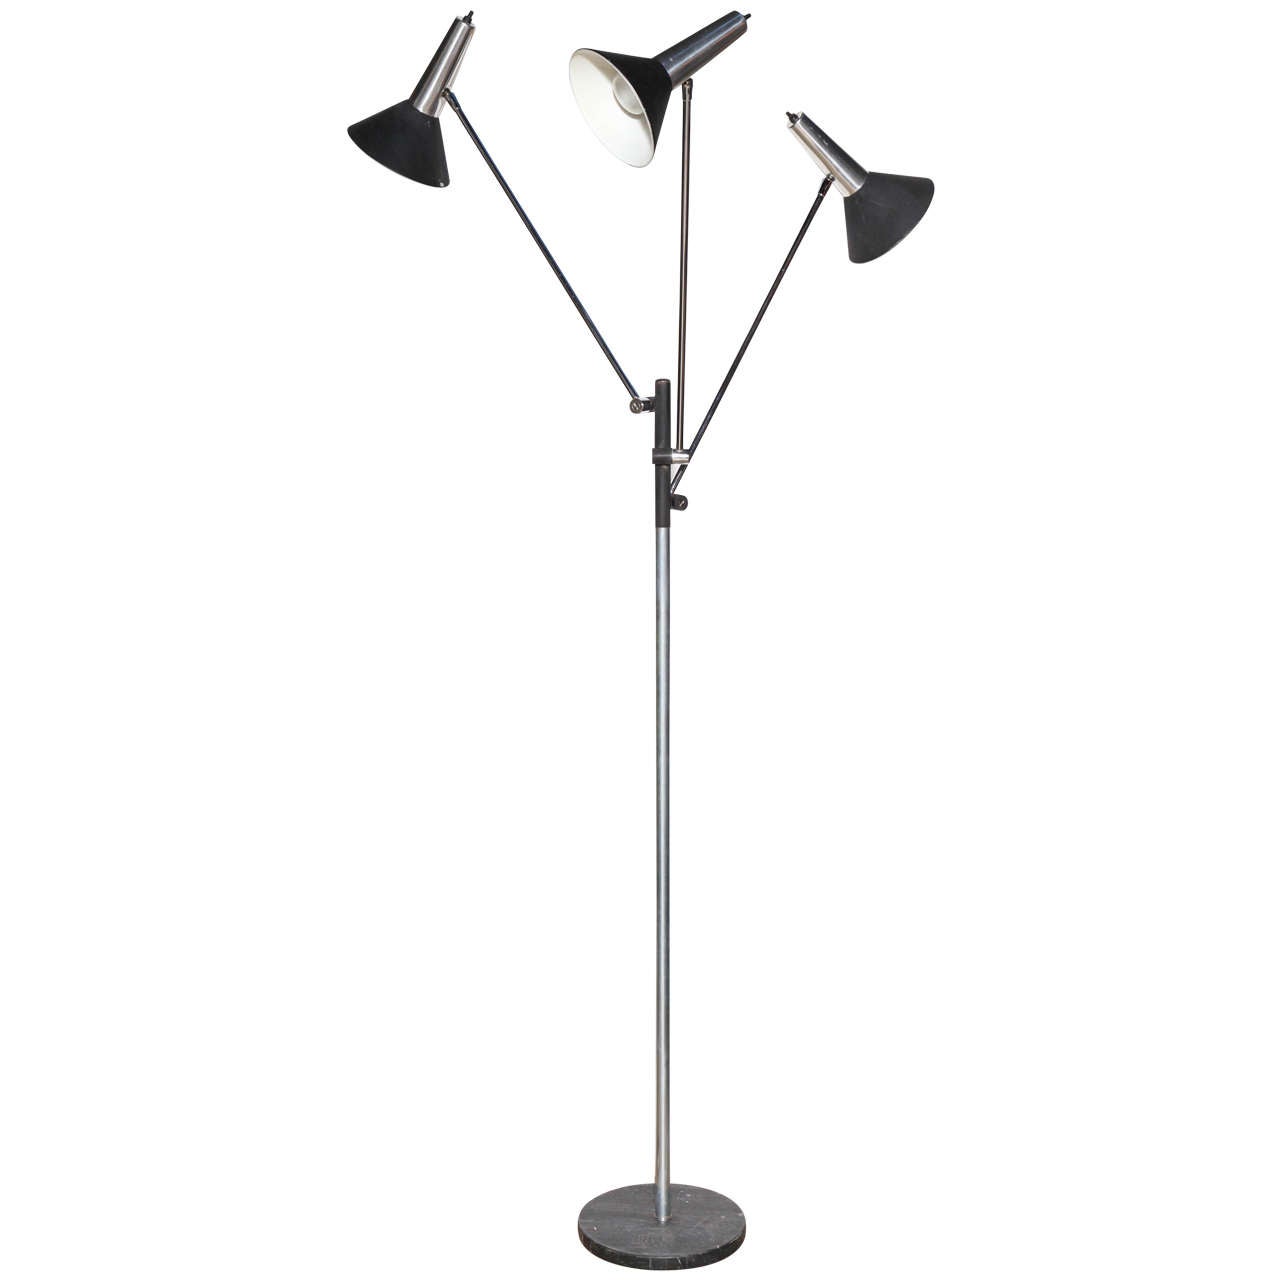 Gino Sarfatti Style Koch & Lowy Articulating Triple Shade Nickel Floor Lamp